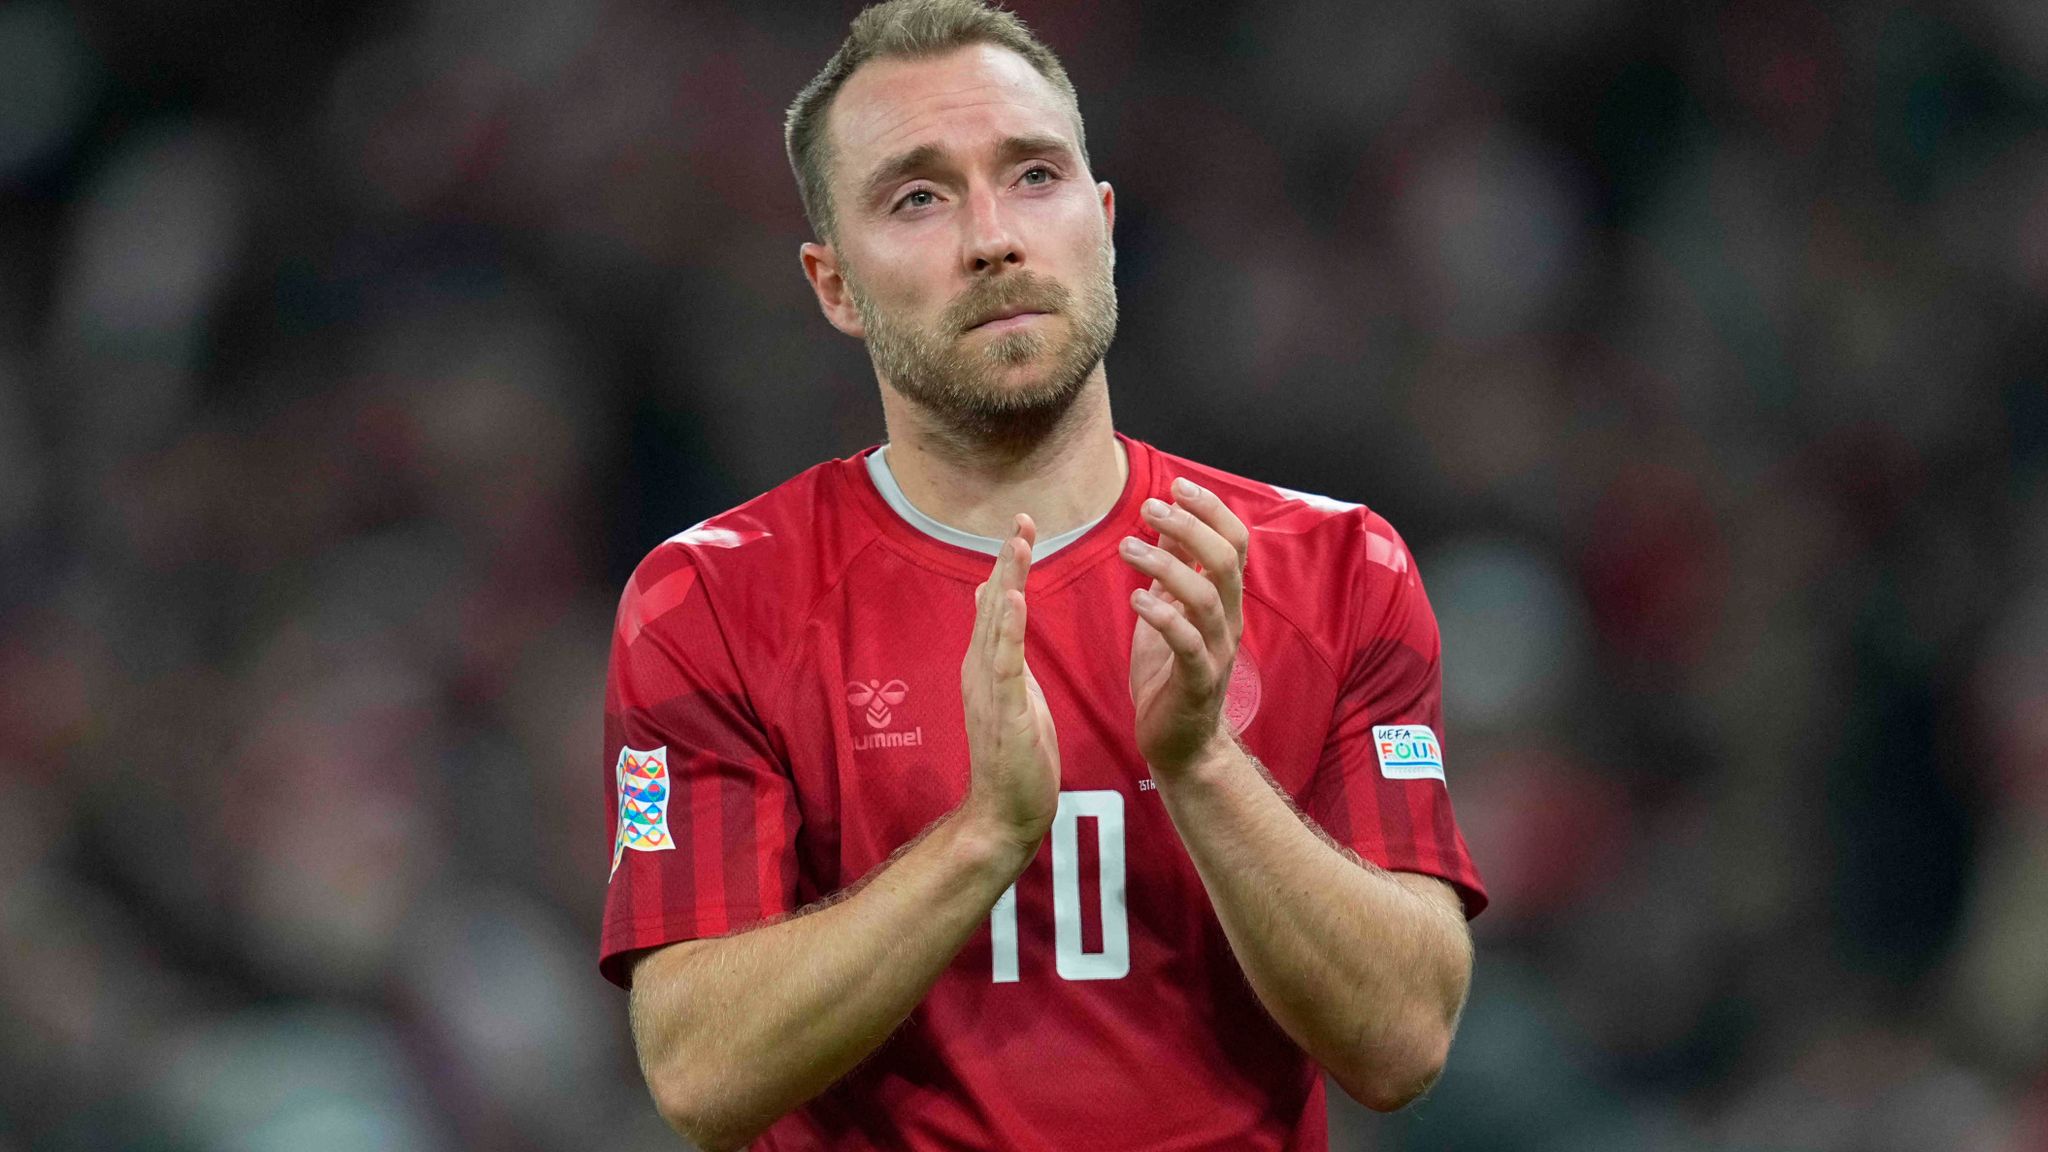 Hummel 'tones down' branding on Denmark's World Cup kit in Qatar protest |  Football News | Sky Sports